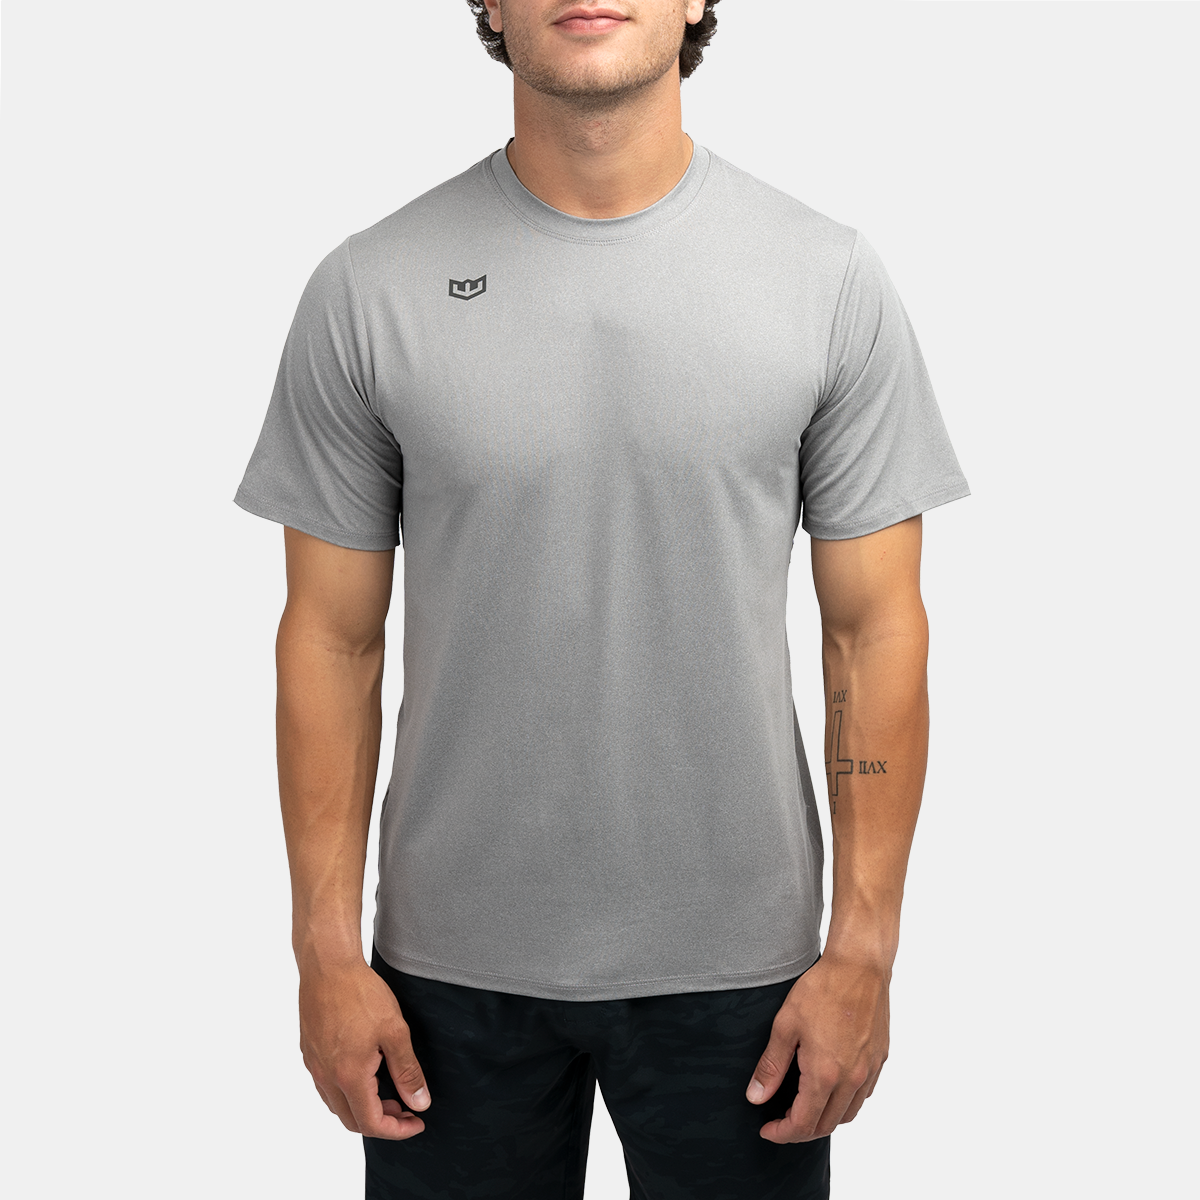 BRIDGELAND - ADULT - DT56 Men's Dry-Tek T-Shirt